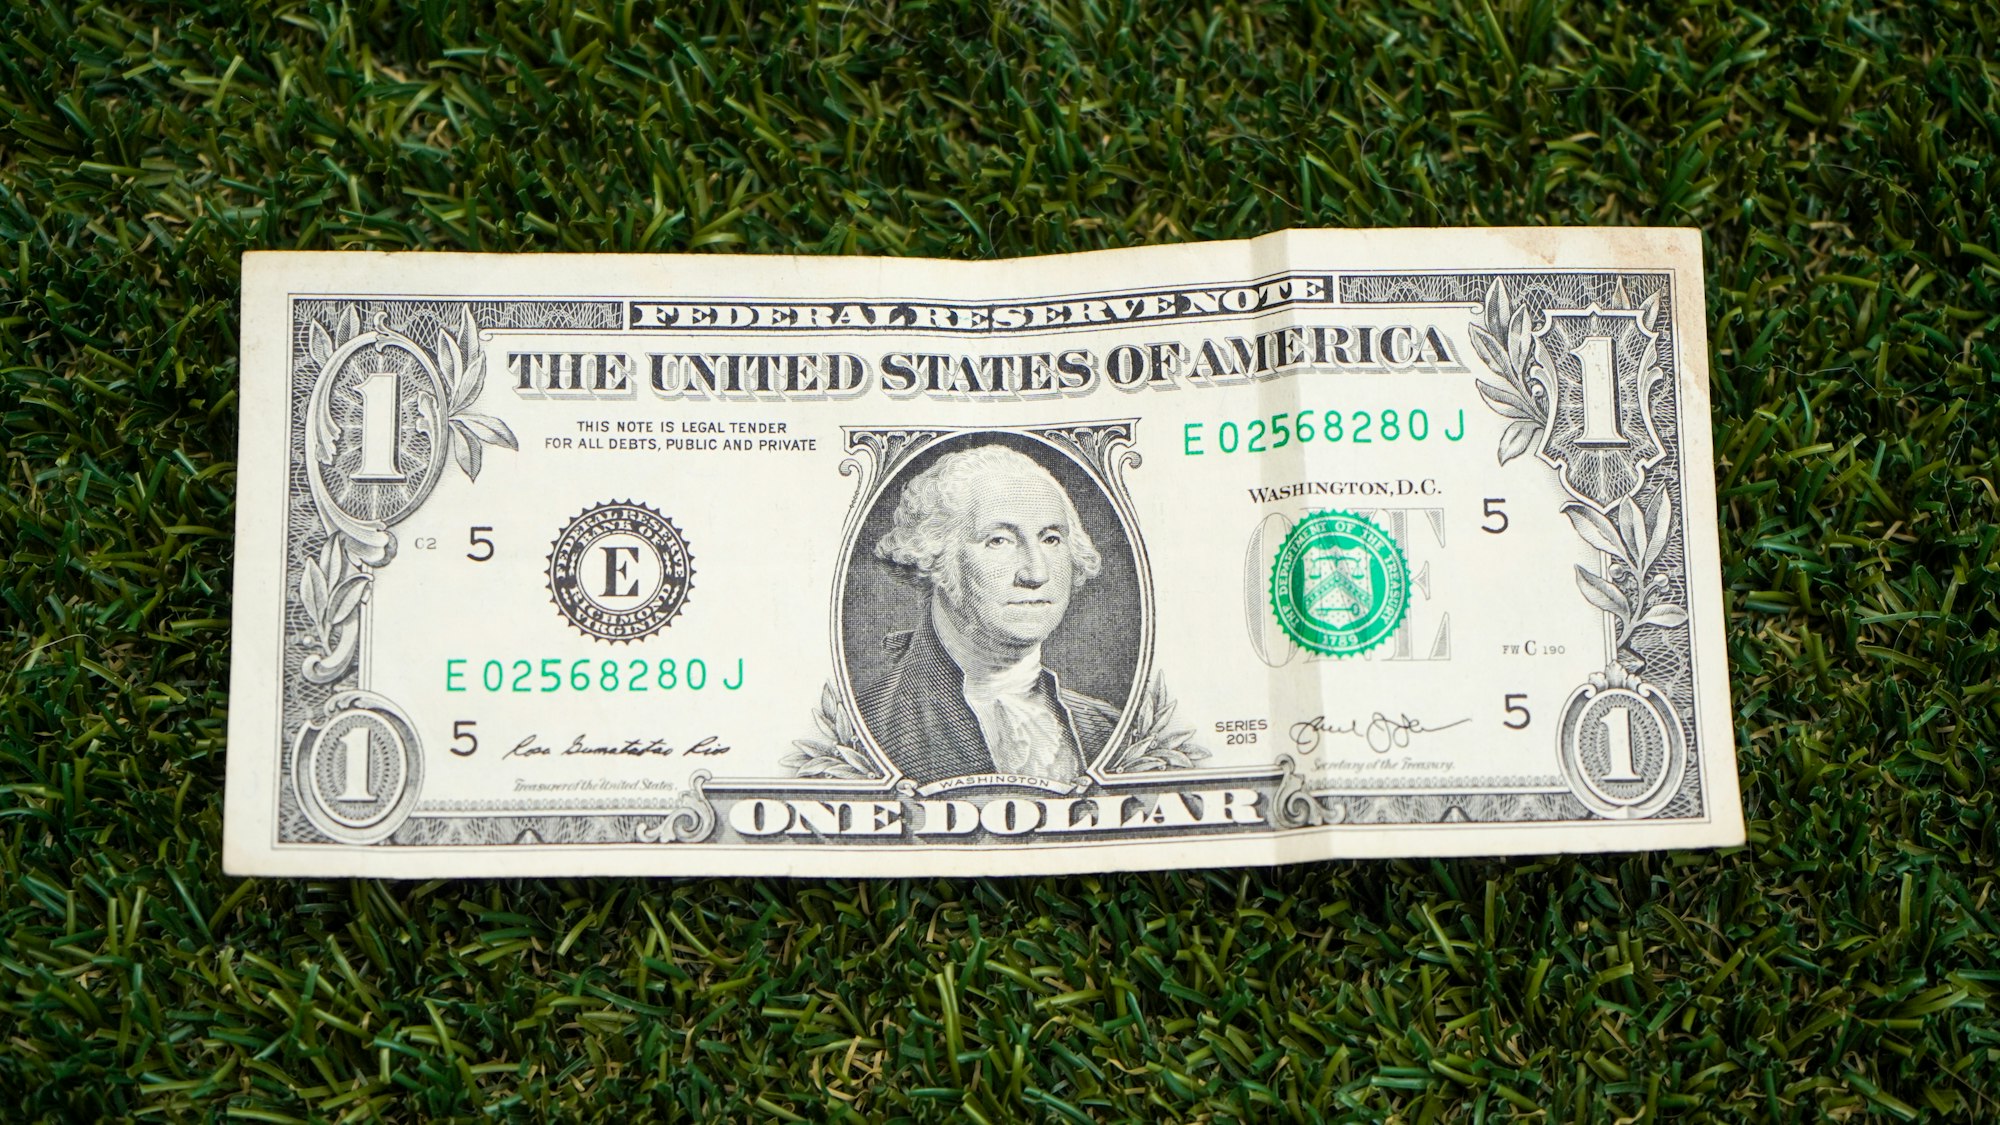 One American dollar bill on the fake grass field.